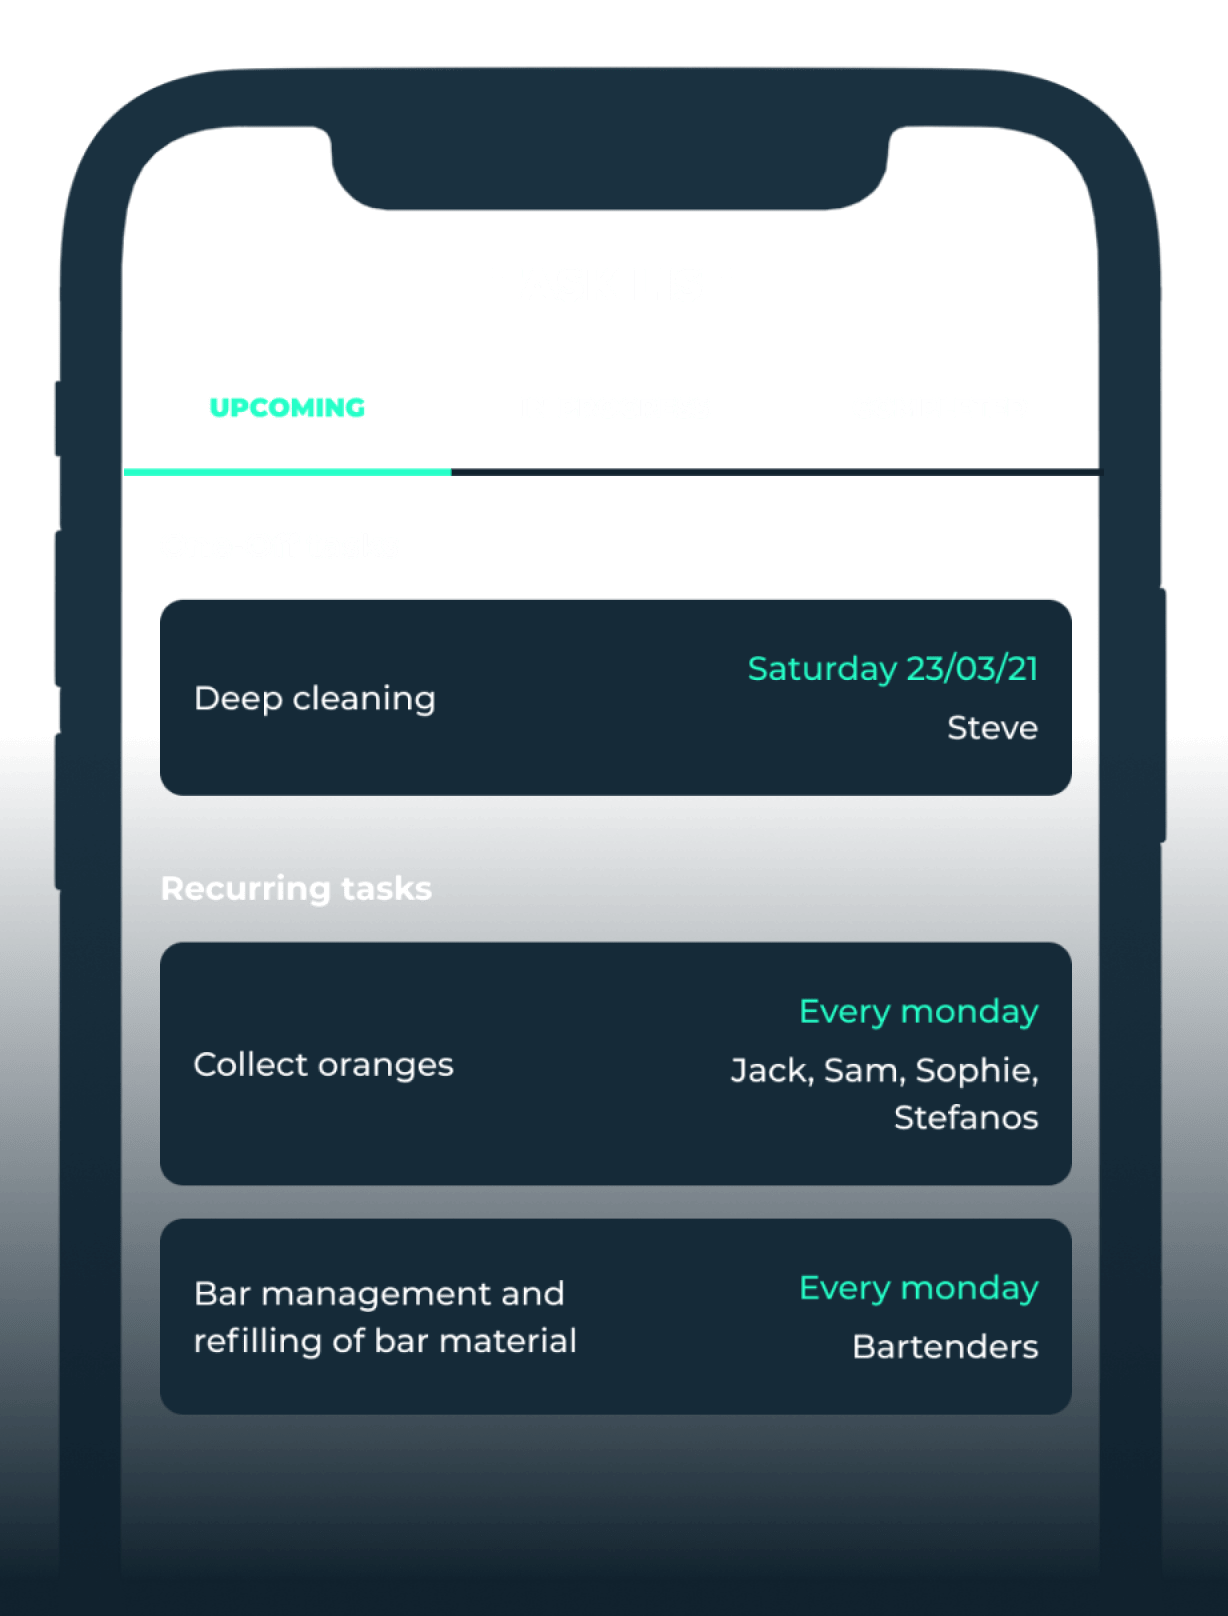 Task list view